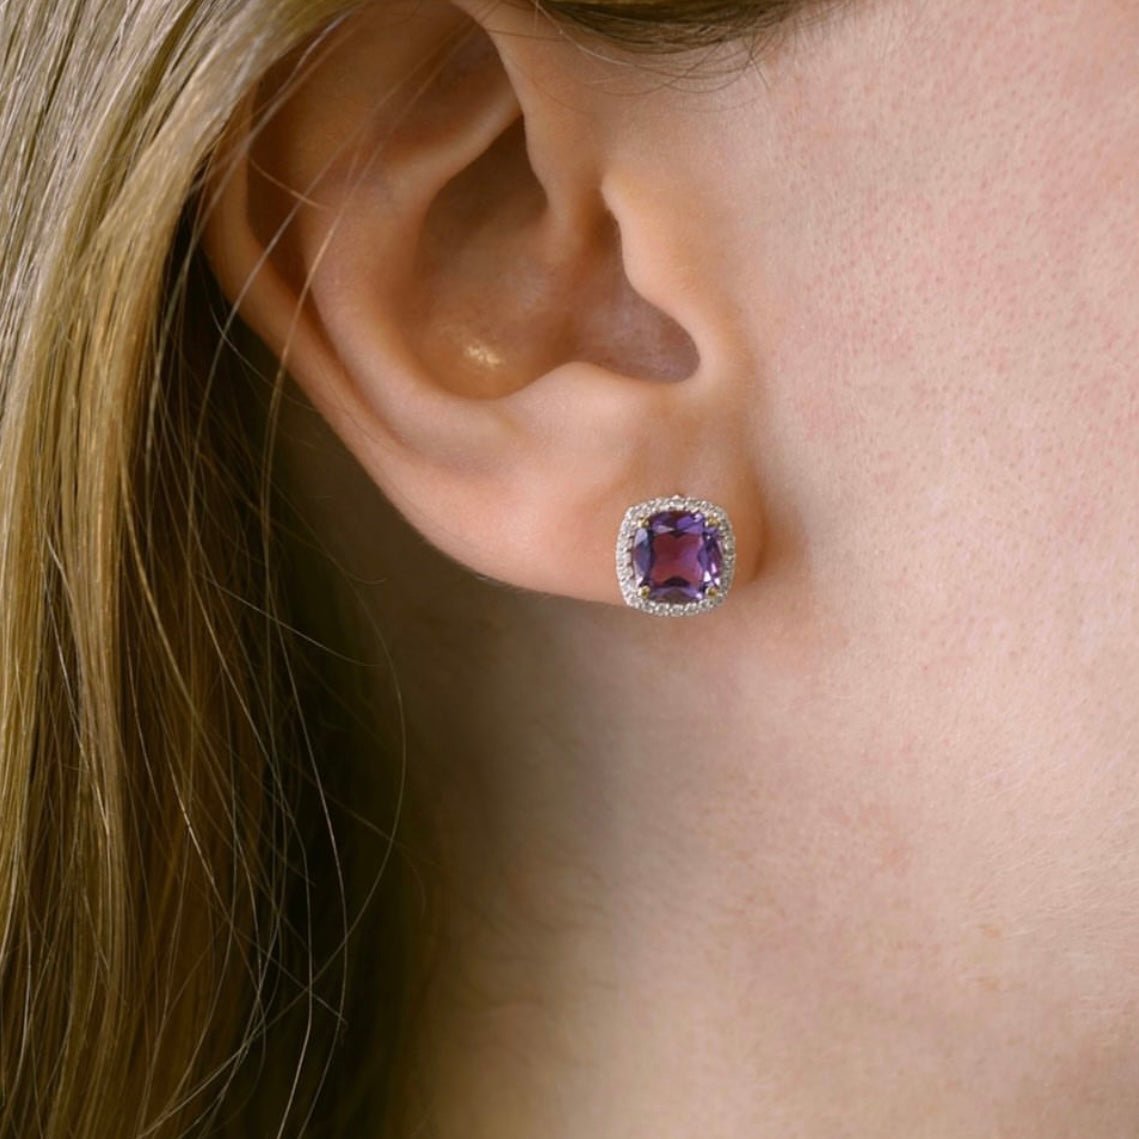 Iris Earrings in Diamond and Amethyst - 18k Gold - Ly